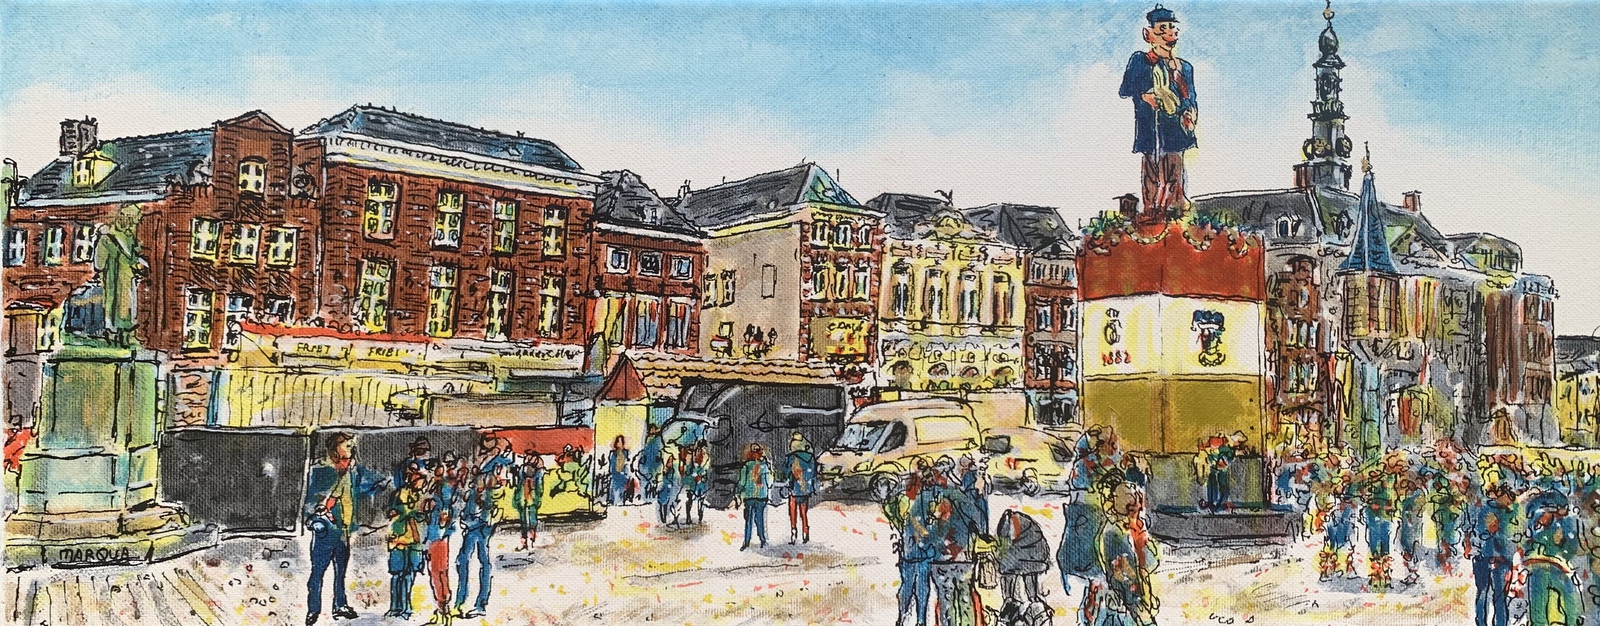 Knillis, Jeroen Bosch, stadhuis op de markt in Oeteldonk MARQUA272 € 495